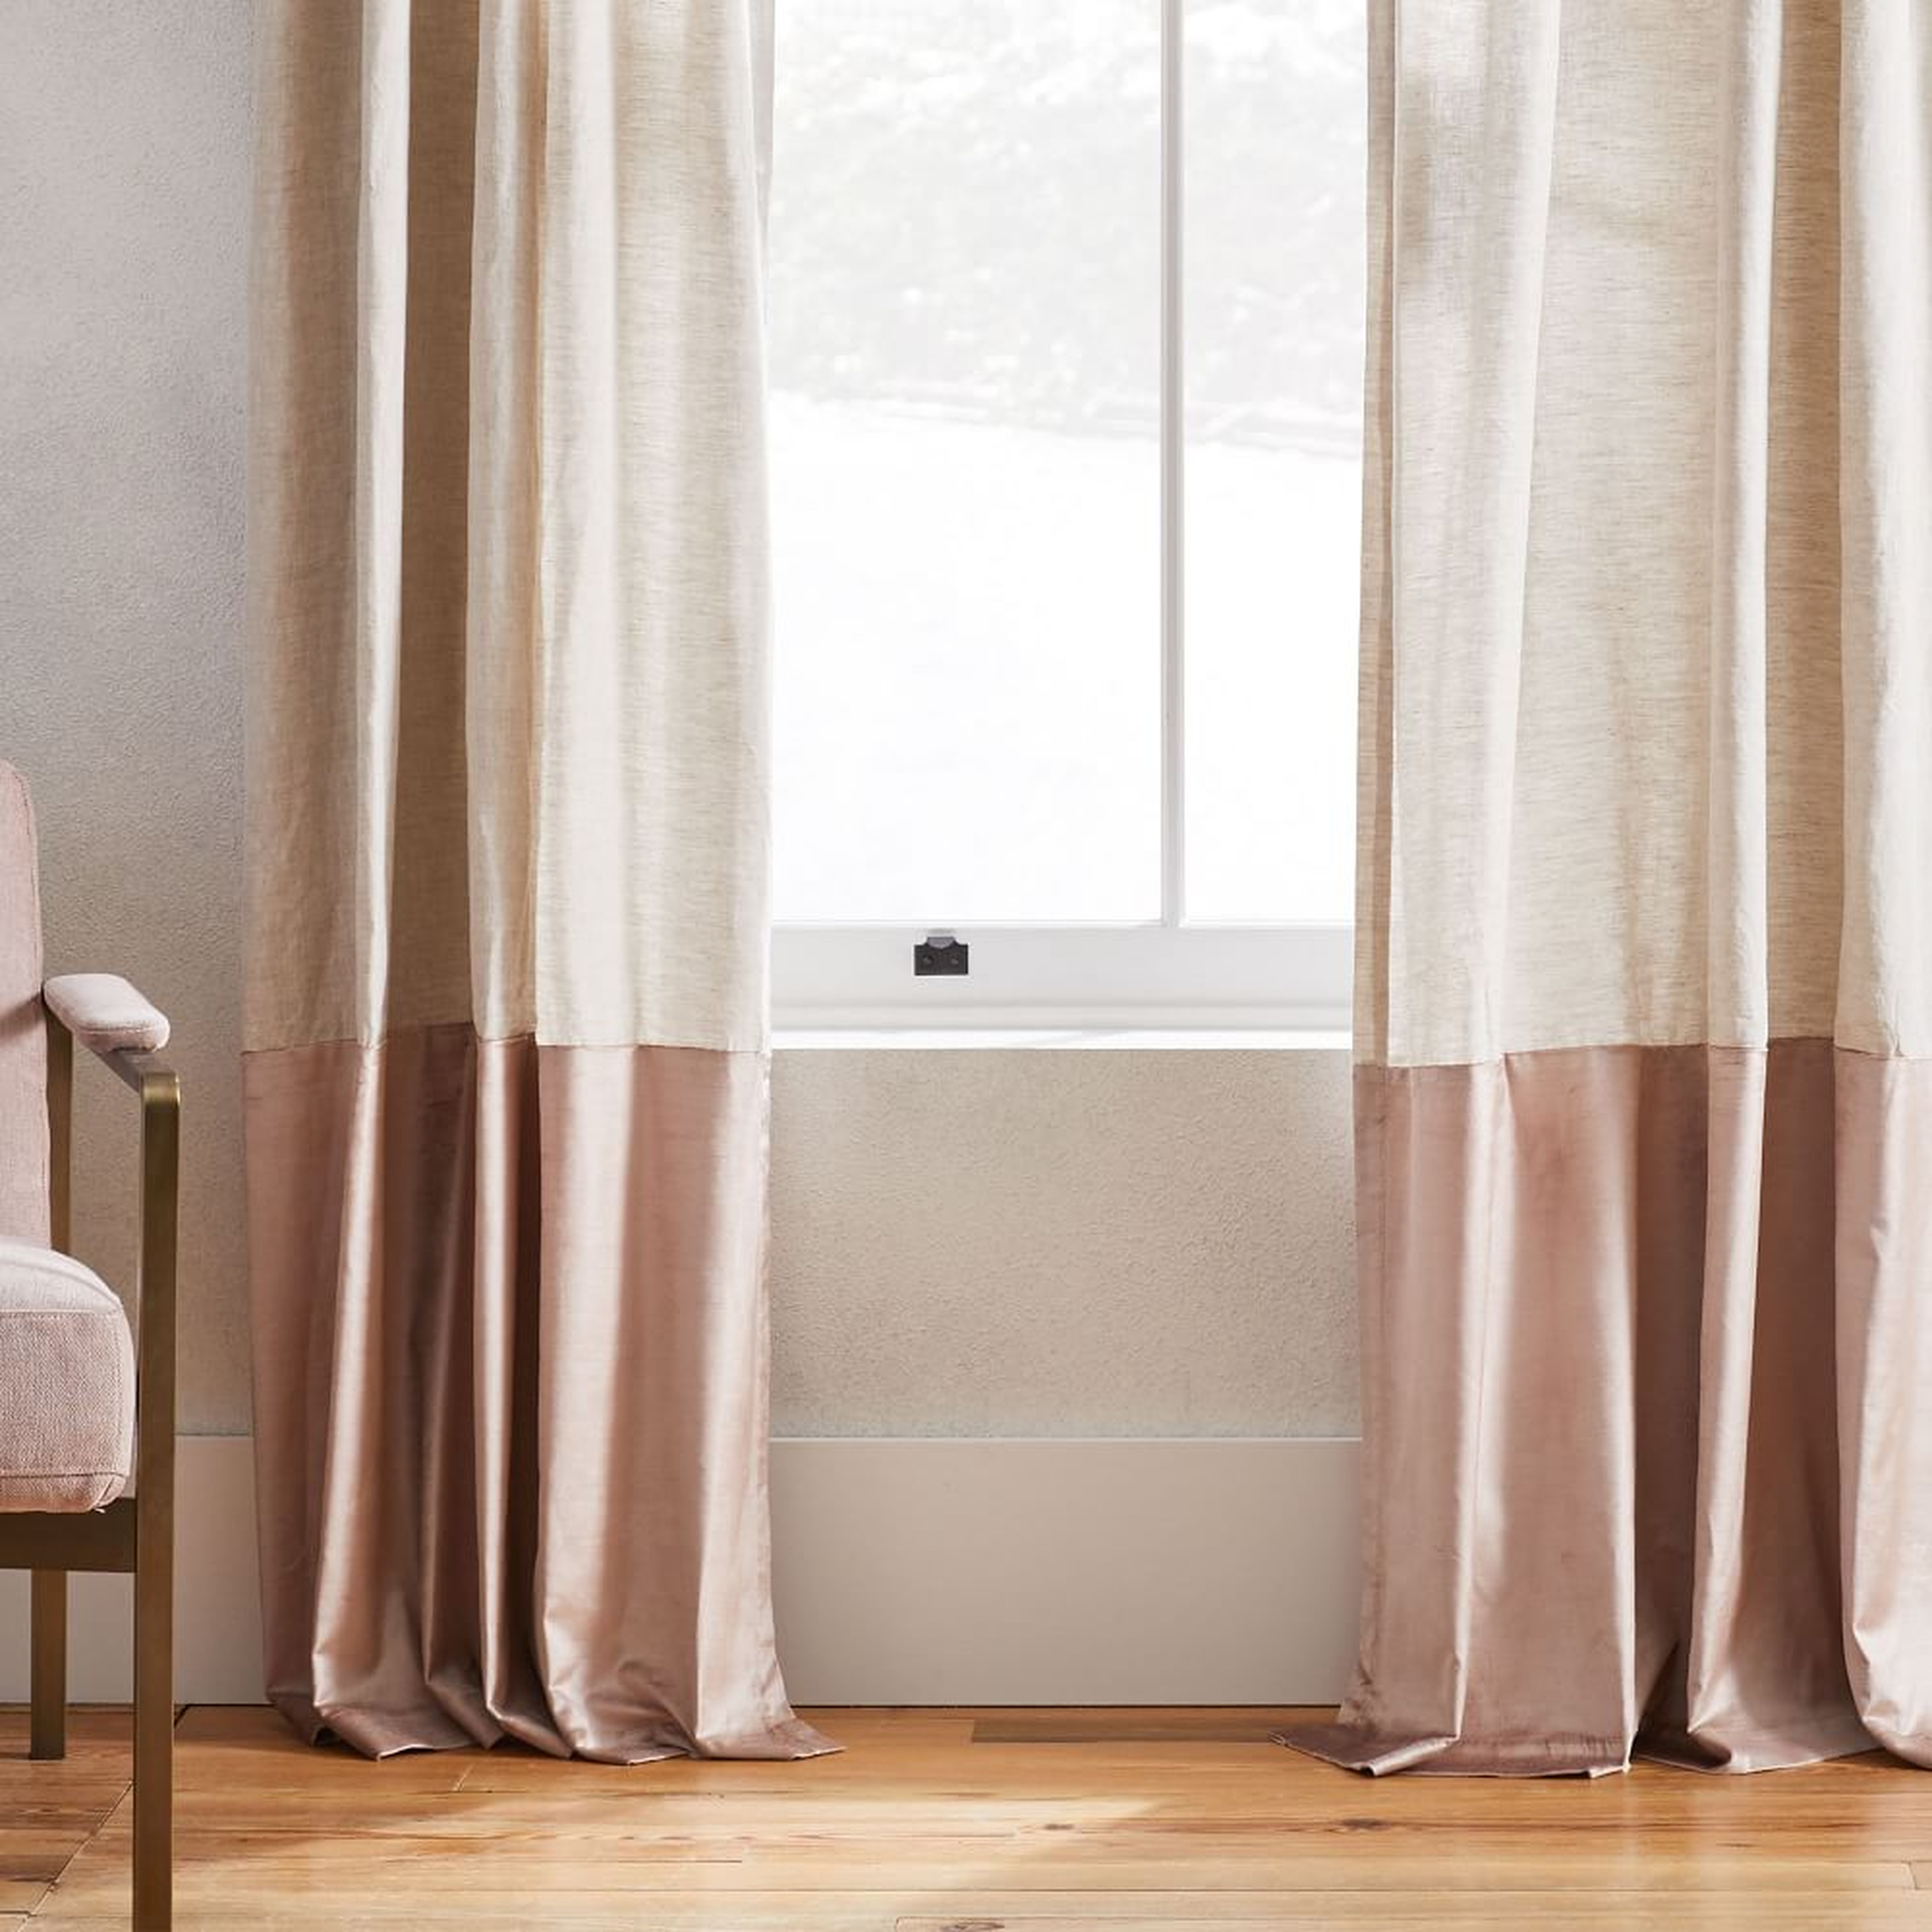 European Linen and Luster Velvet Curtain, Natural/Dusty Blush, 48"x84", Set of 2 - West Elm